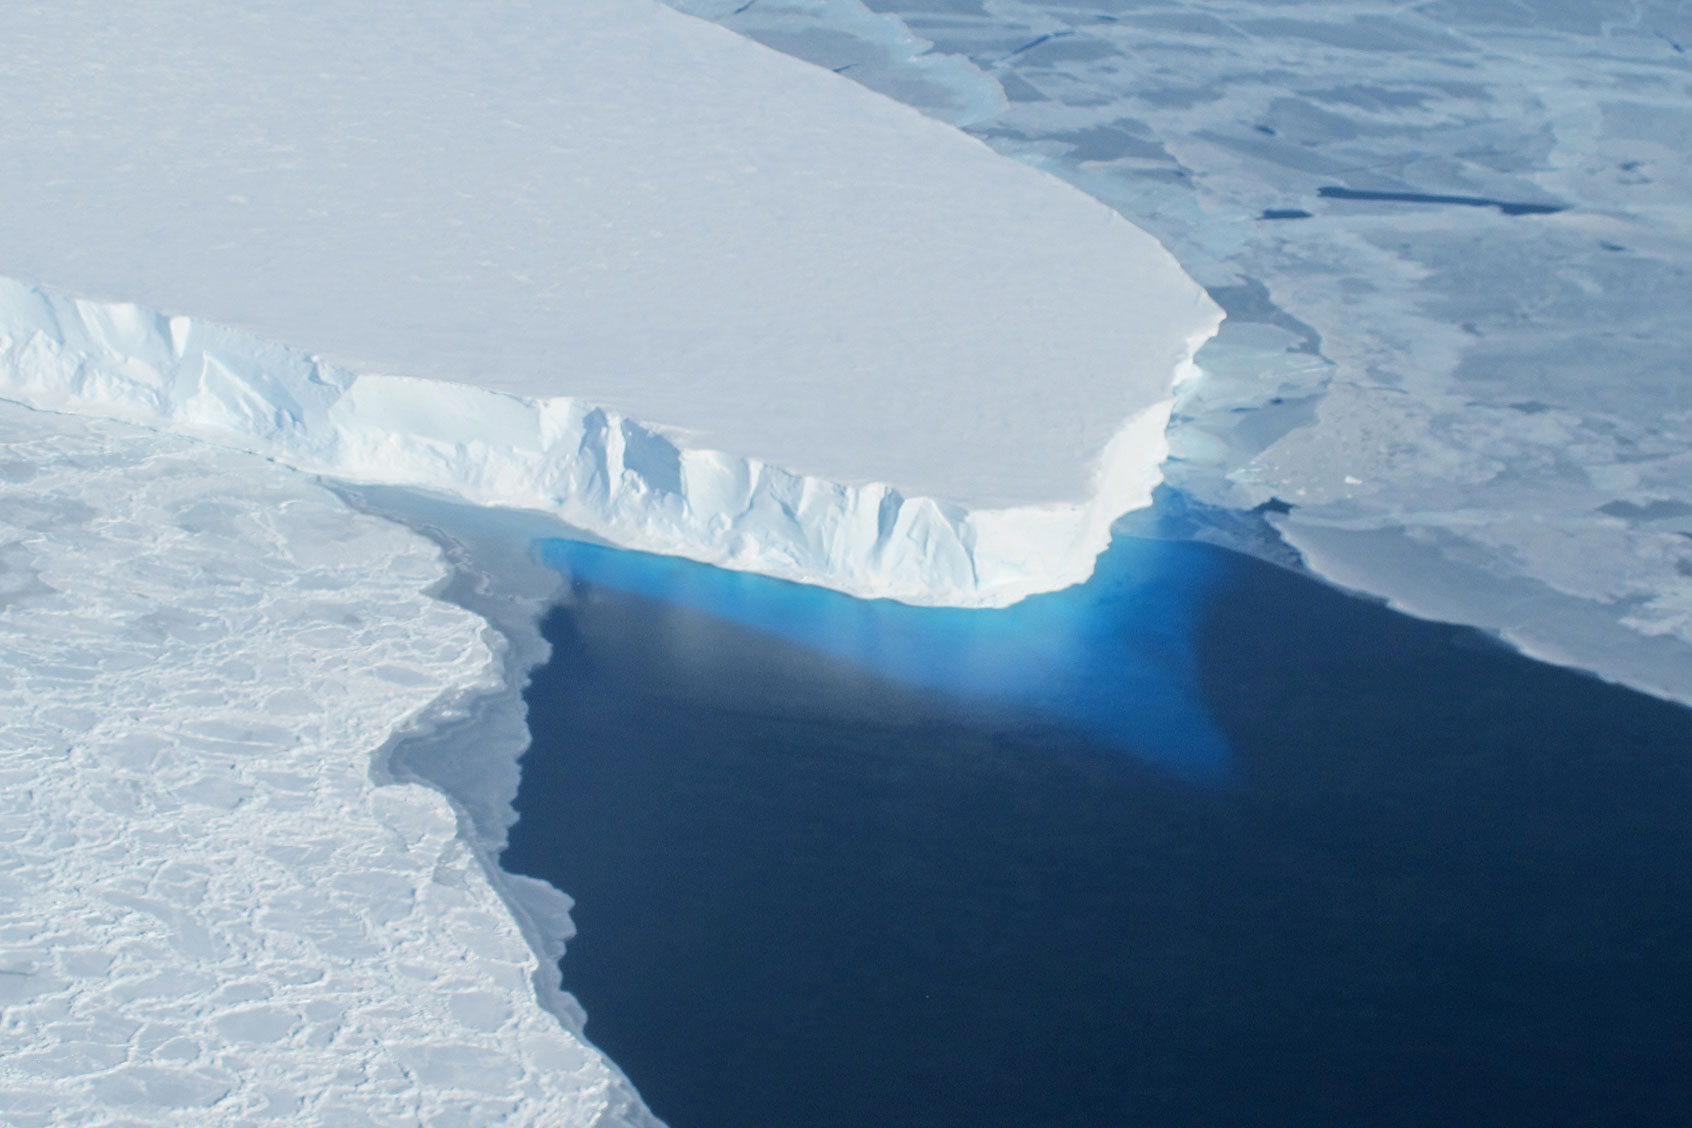 Antarctica’s “Doomsday Glacier” began to retreat in the 1940s because of an El Niño event